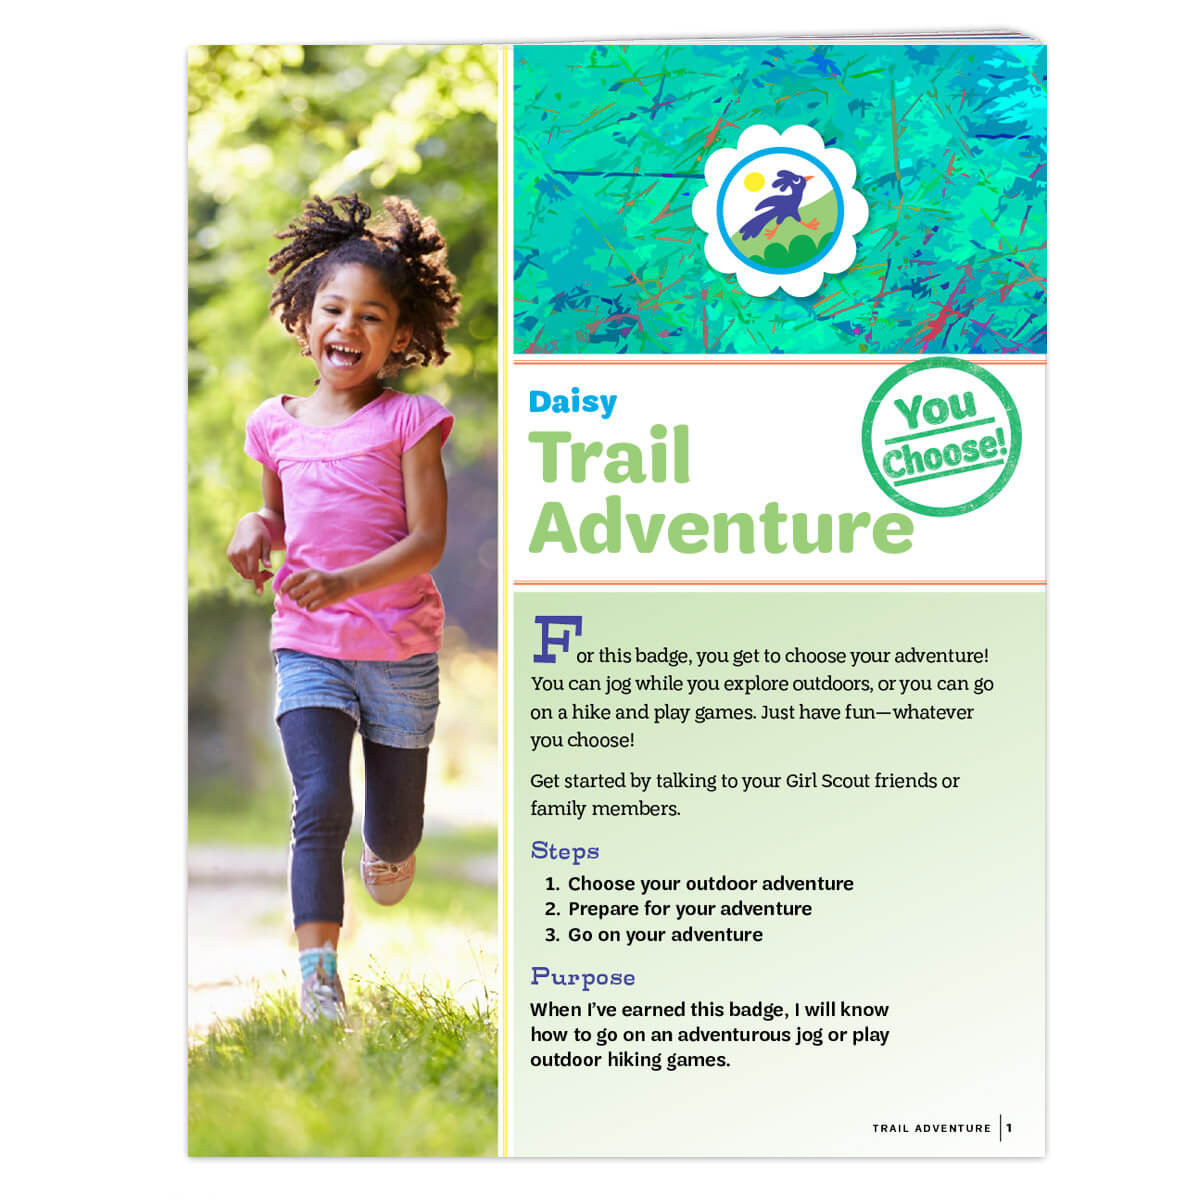 Daisy Trail Adventure REQ 